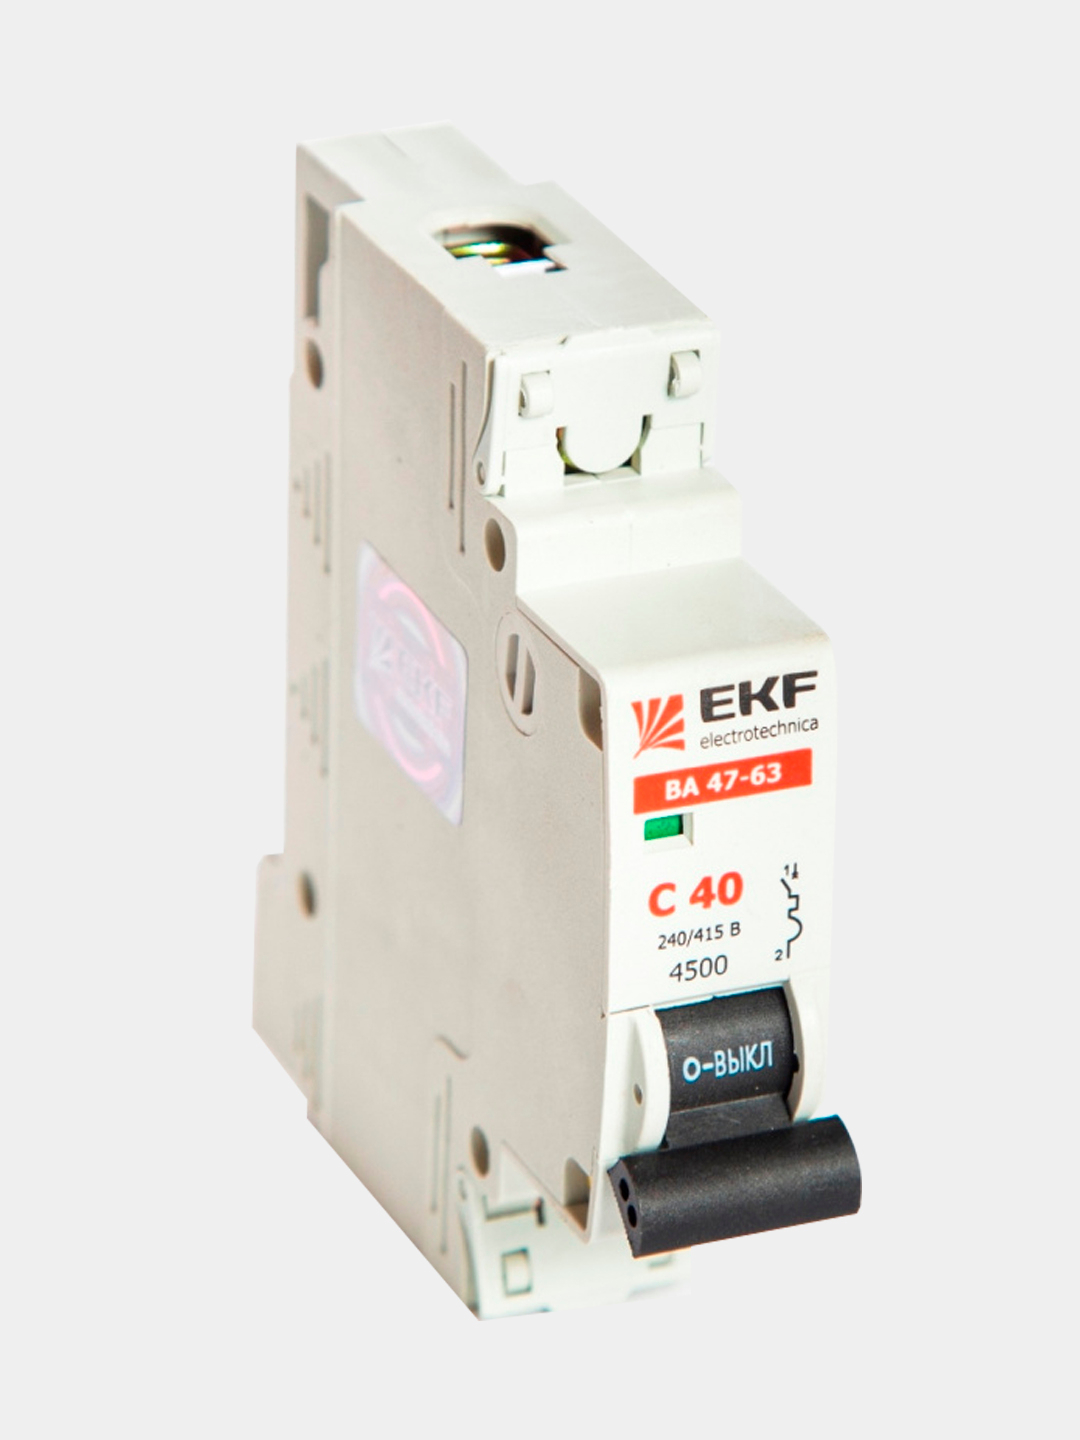 Ekf автоматический выключатель 1p 16а. Автоматический выключатель EKF proxima ва47-63. Автоматический выключатель EKF c63. Автоматический выключатель EKF ba 47-63. Автомат EKF с32.